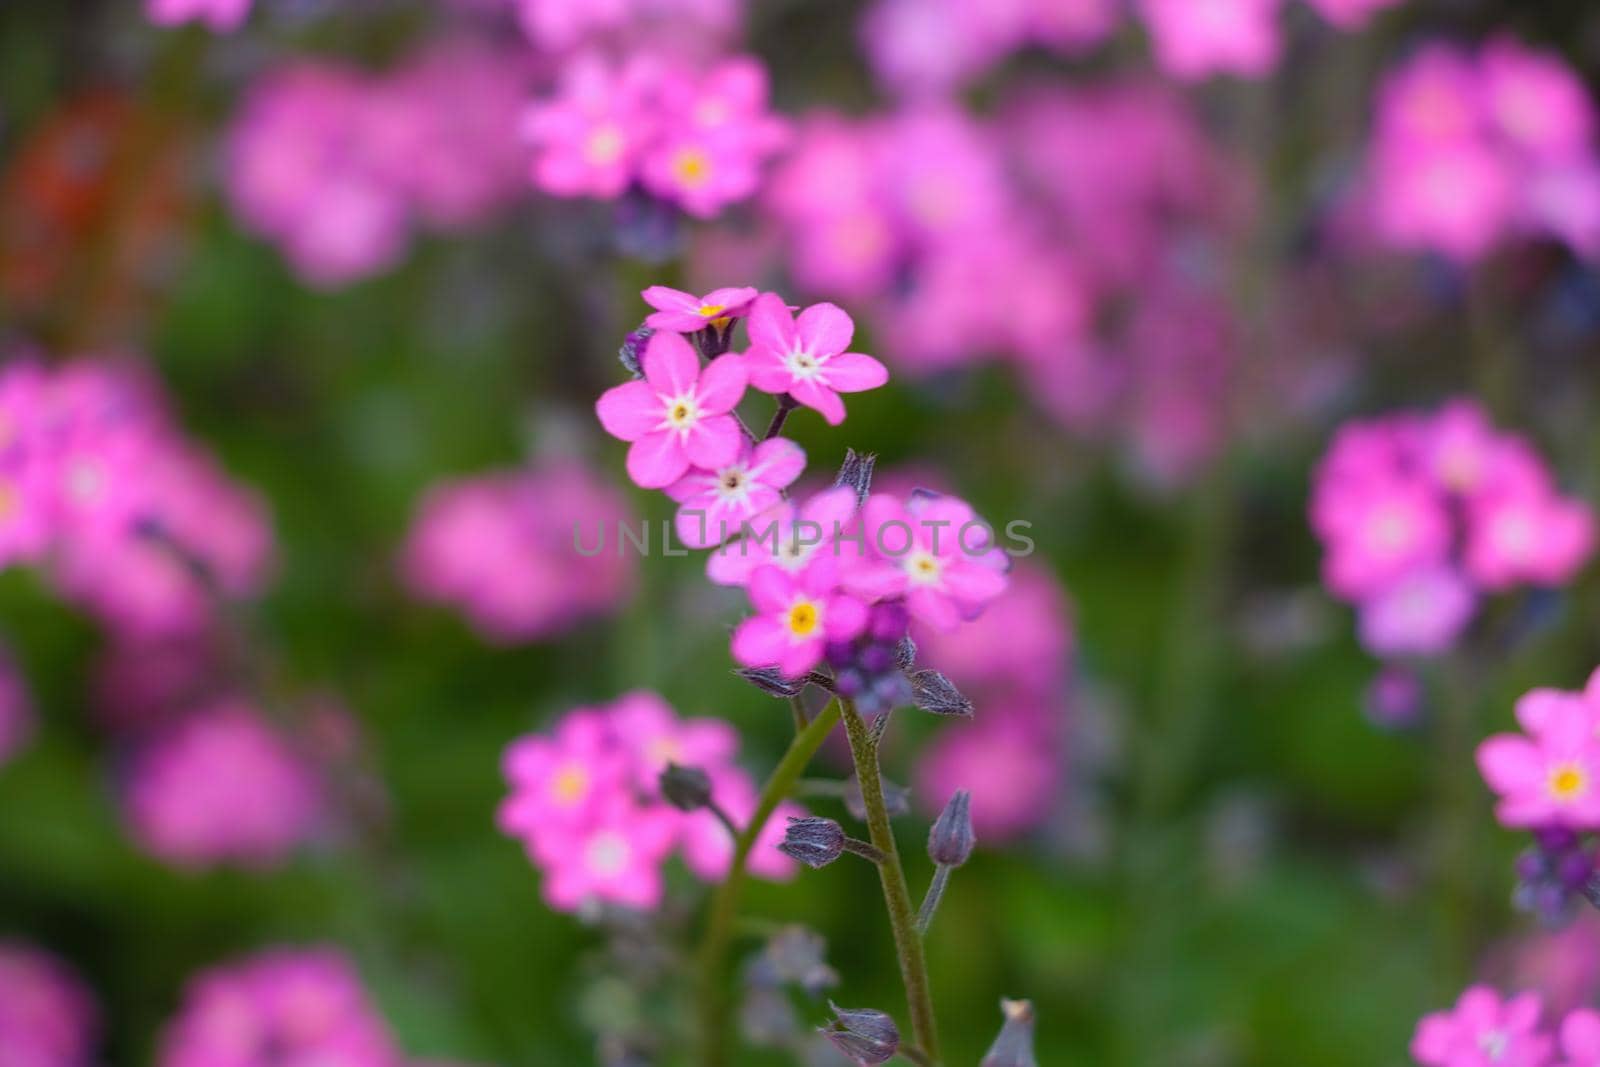 Beautiful perennial flowers bloom in the summer meadow. by kip02kas